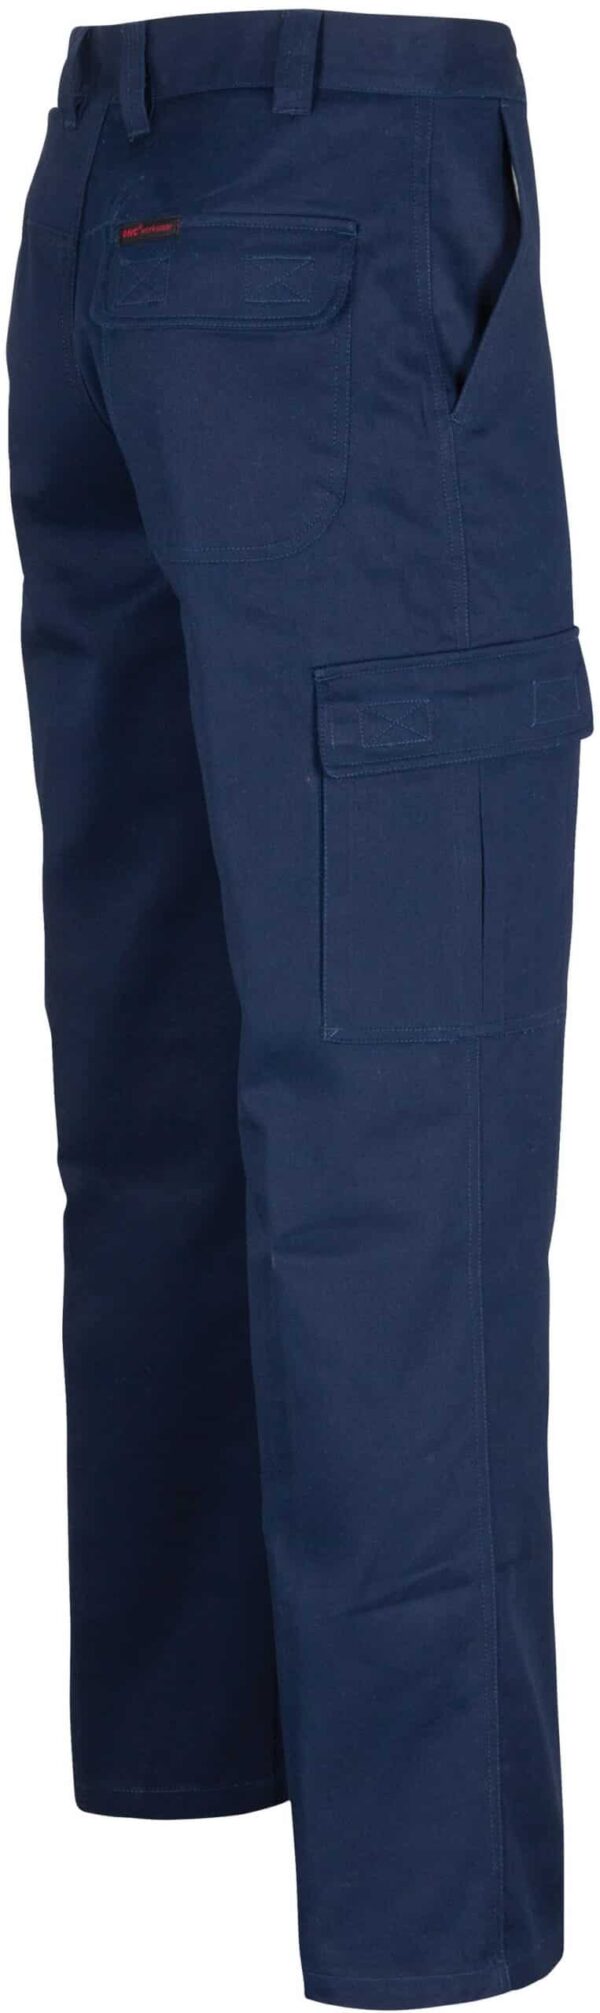 DNC Workwear Middle Weight Cotton Double Slant Cargo Pants